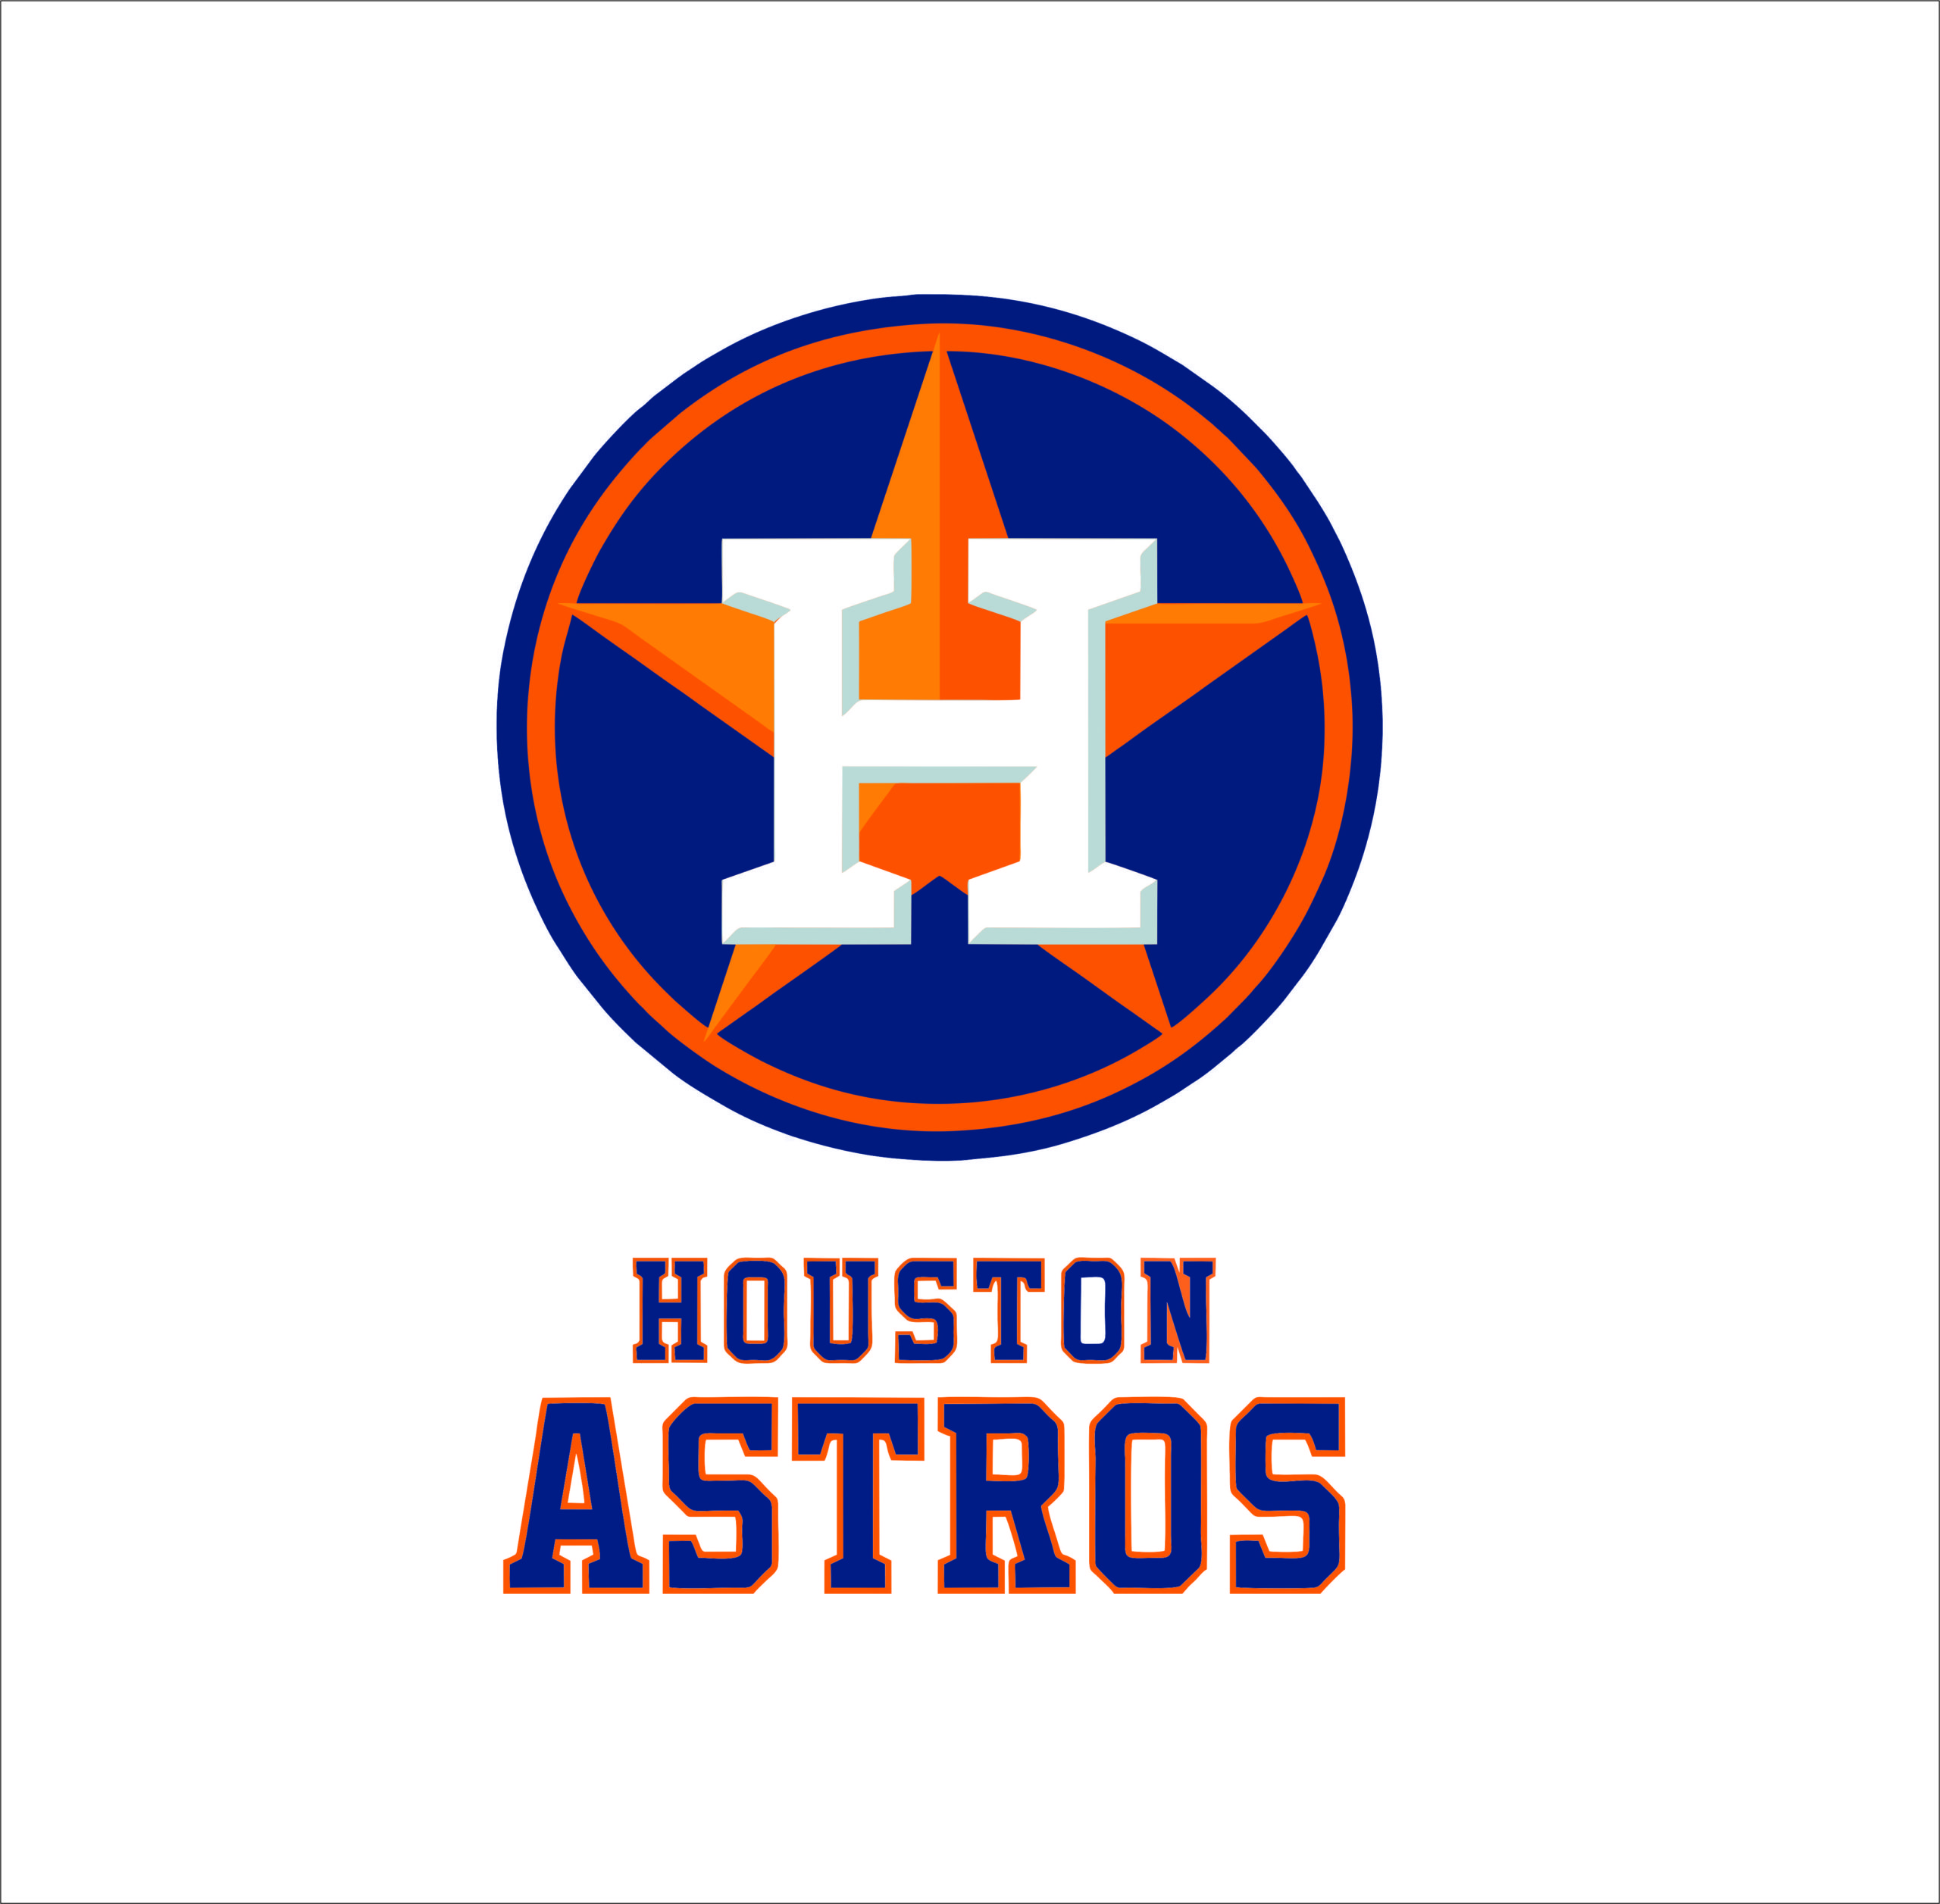 Houston Astros logo | SVGprinted